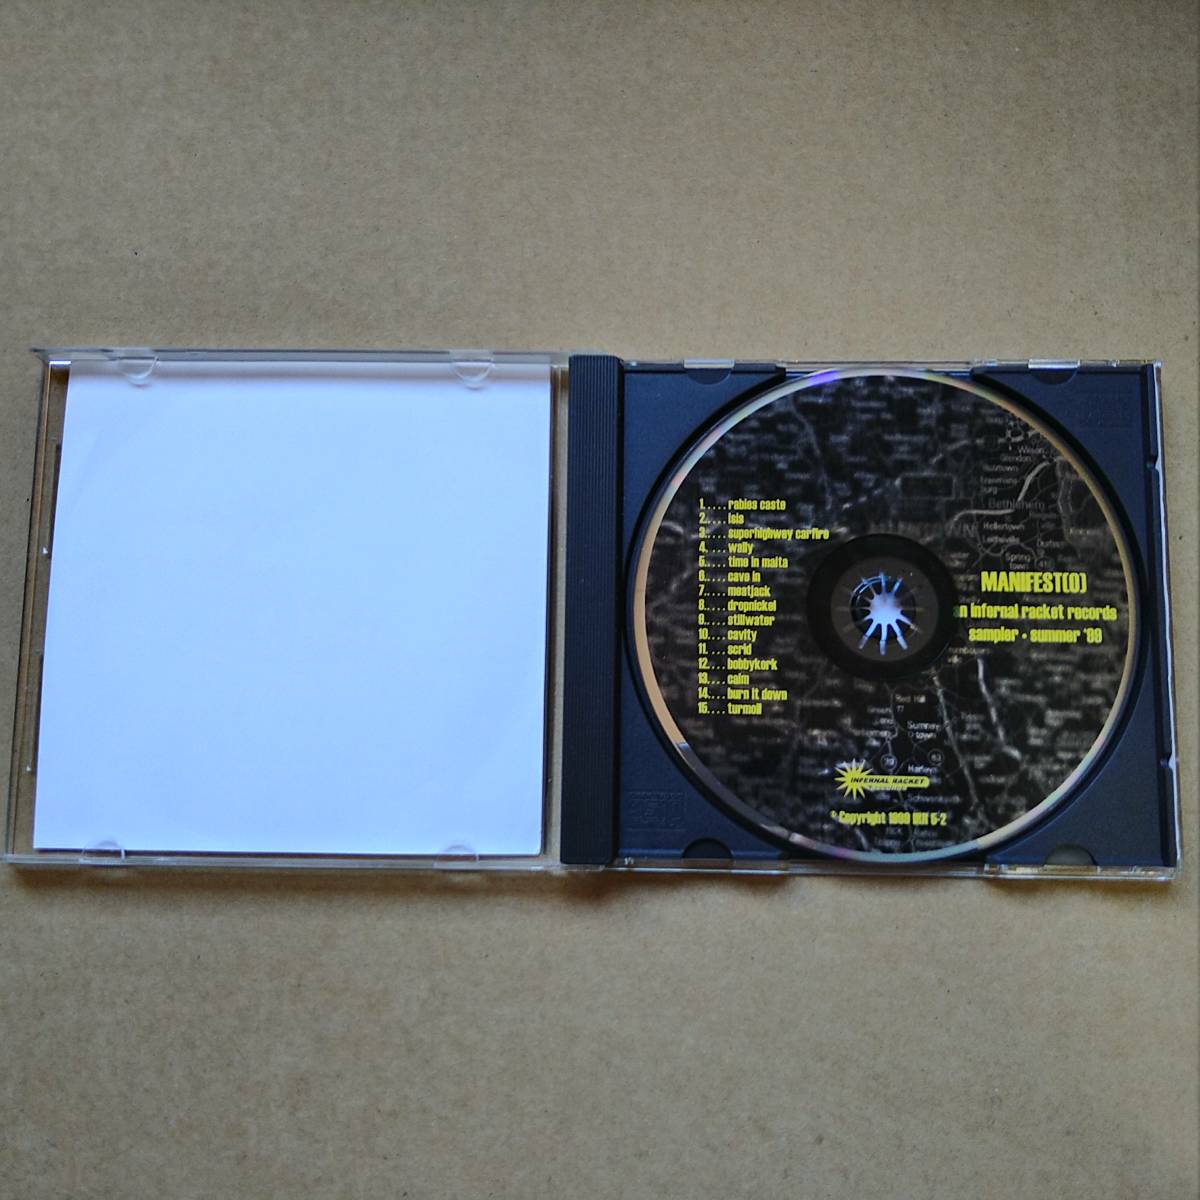 V.A. / MANIFEST(O) An Infernal Racket Sampler [CD] 1999年 IRR 5-2 輸入盤 Isis/Wally/Cave In/Cavity/Burn It Down/Turmoil/他_画像3